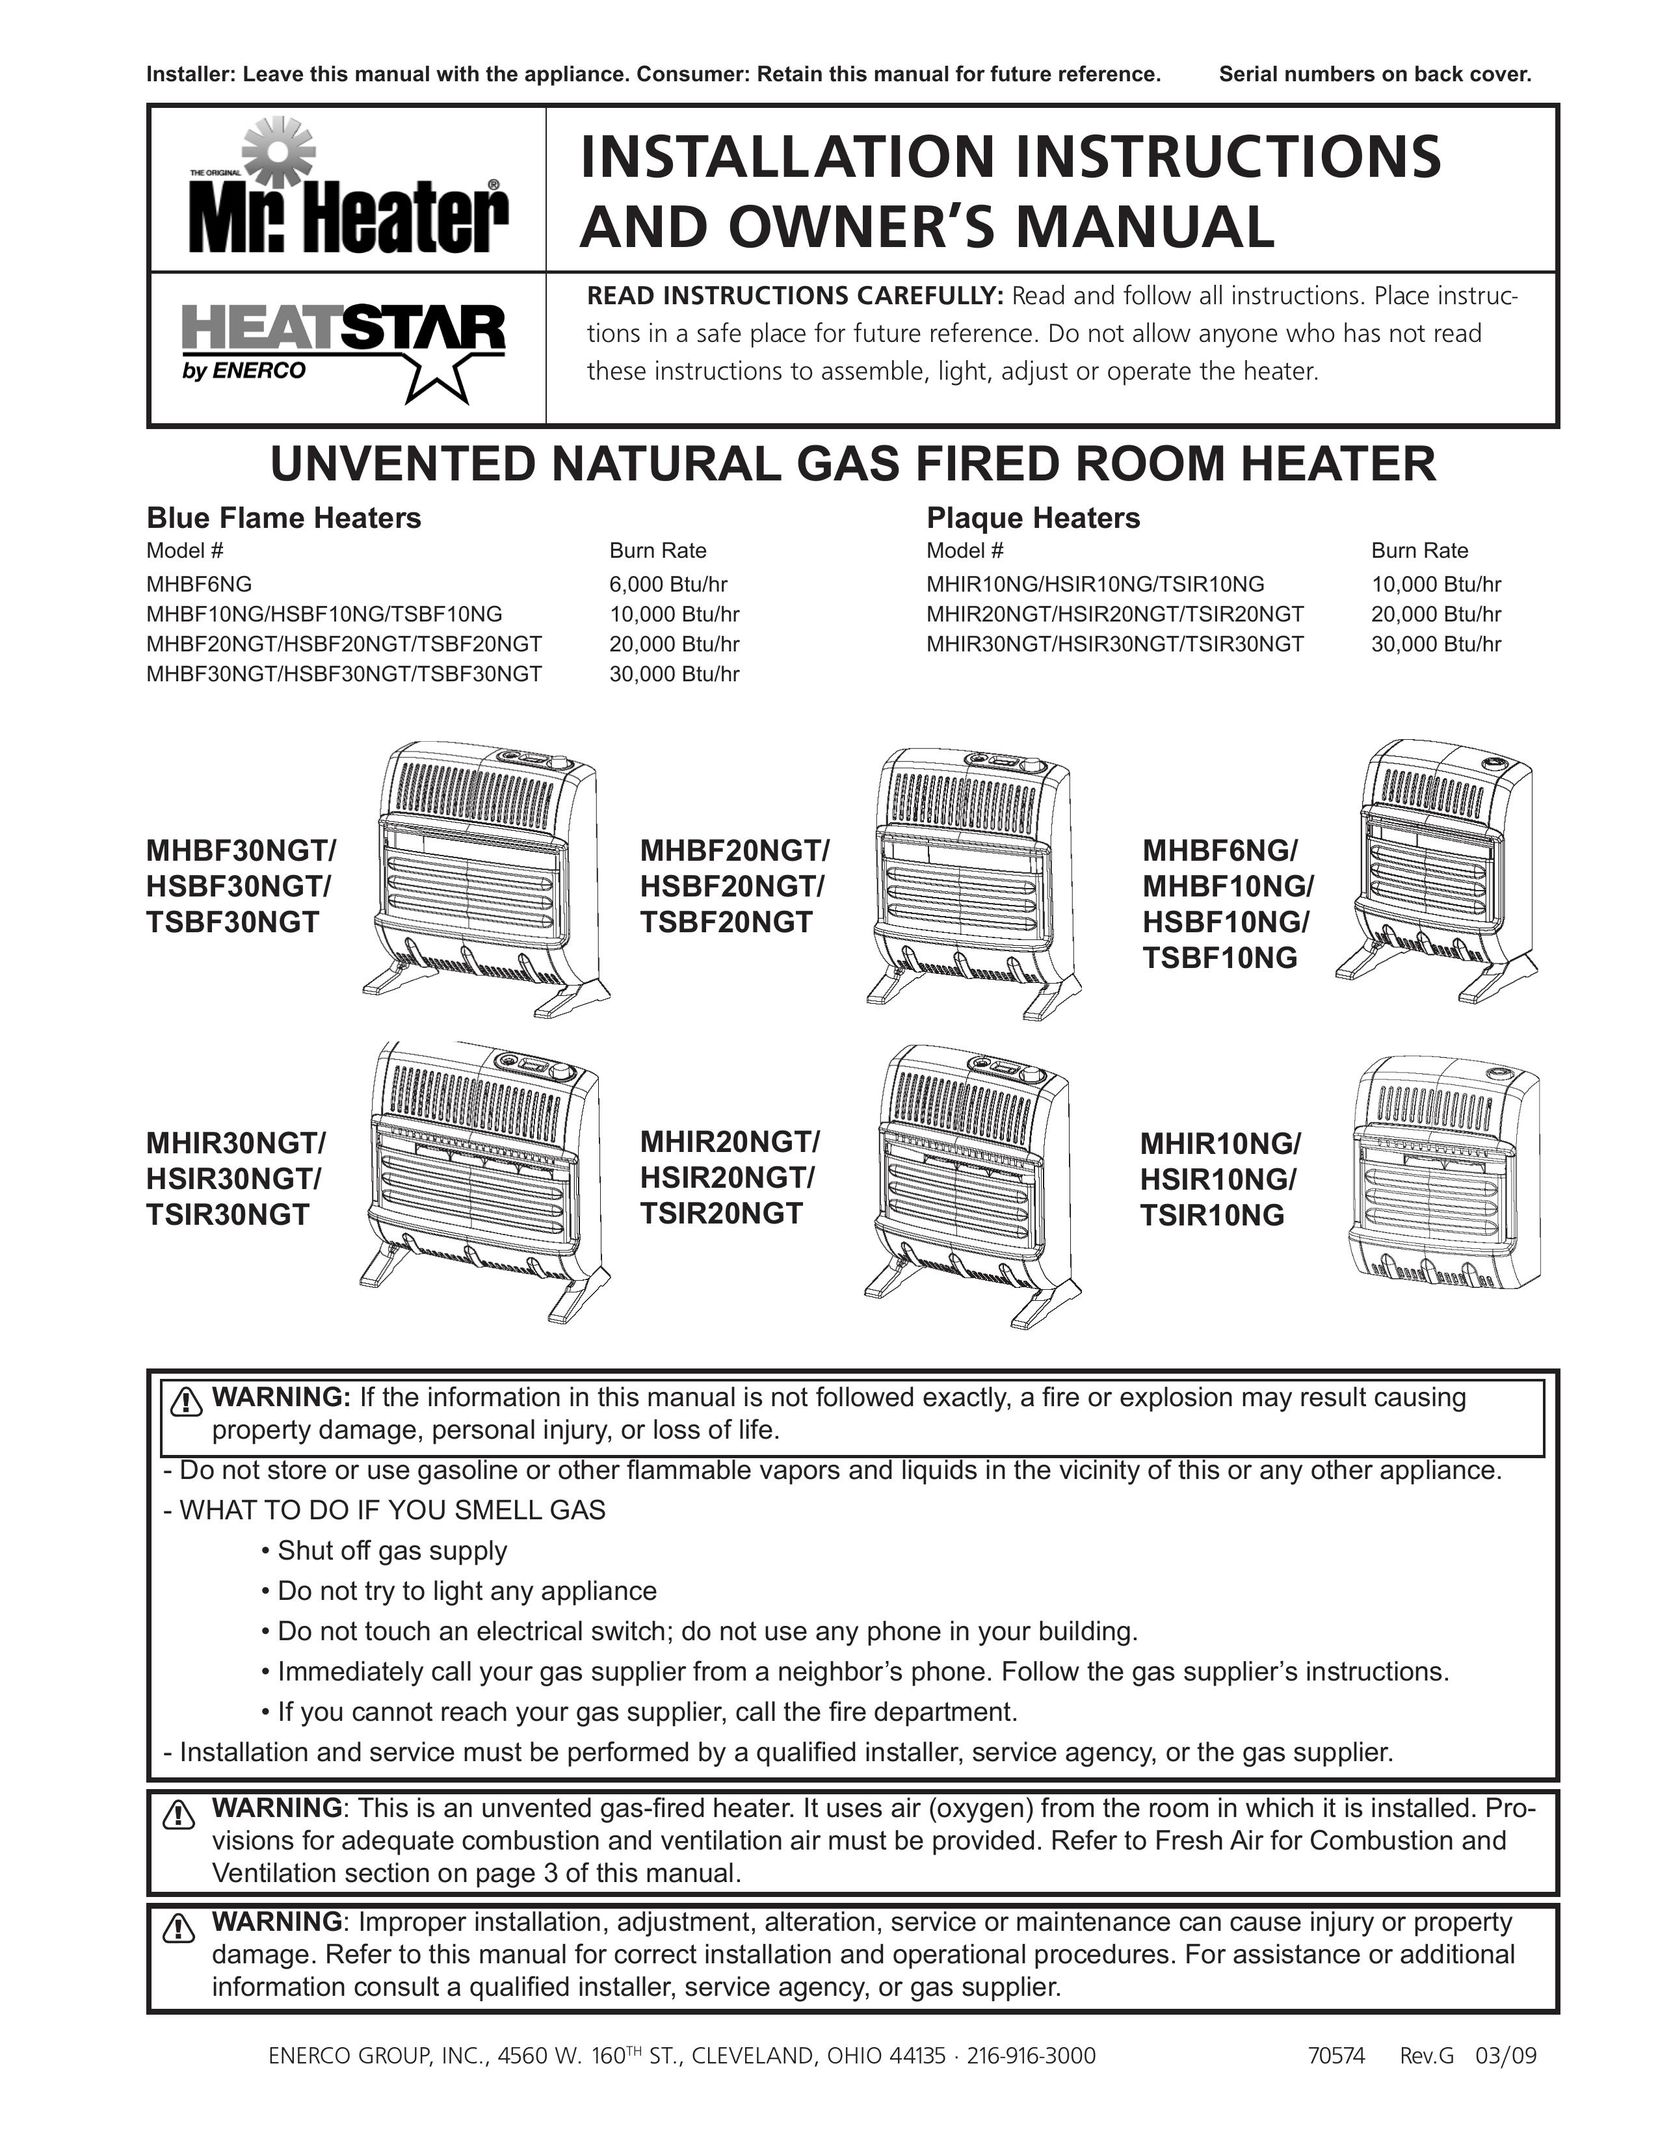 Enerco MHBF6NG Gas Heater User Manual